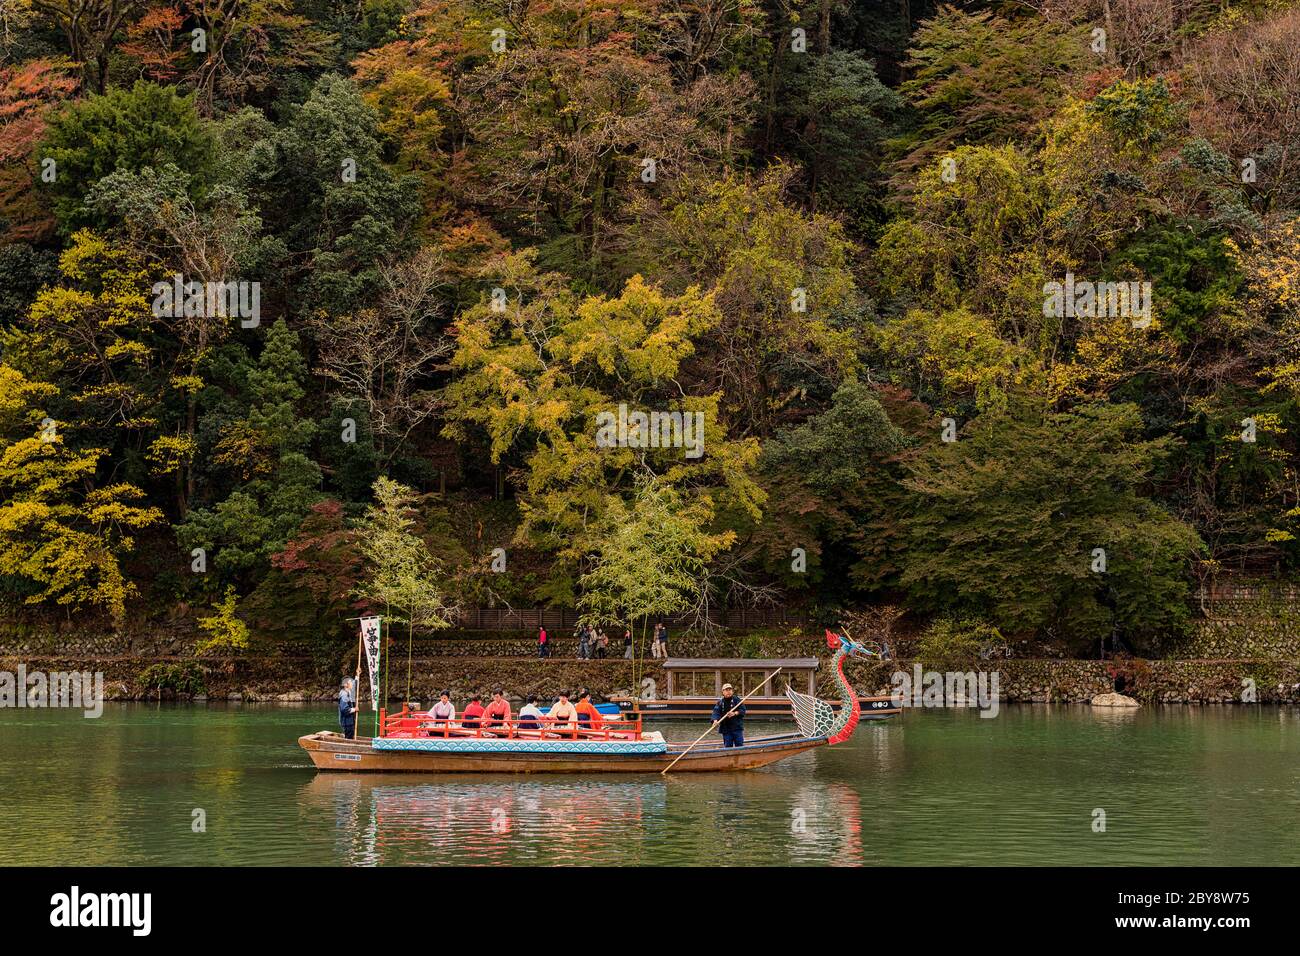 Kyoto / Japan - November 12, 2017: People enjoying traditional boat ride down the Katsura River near Arashiyama park in Kyoto, Japan Stock Photo